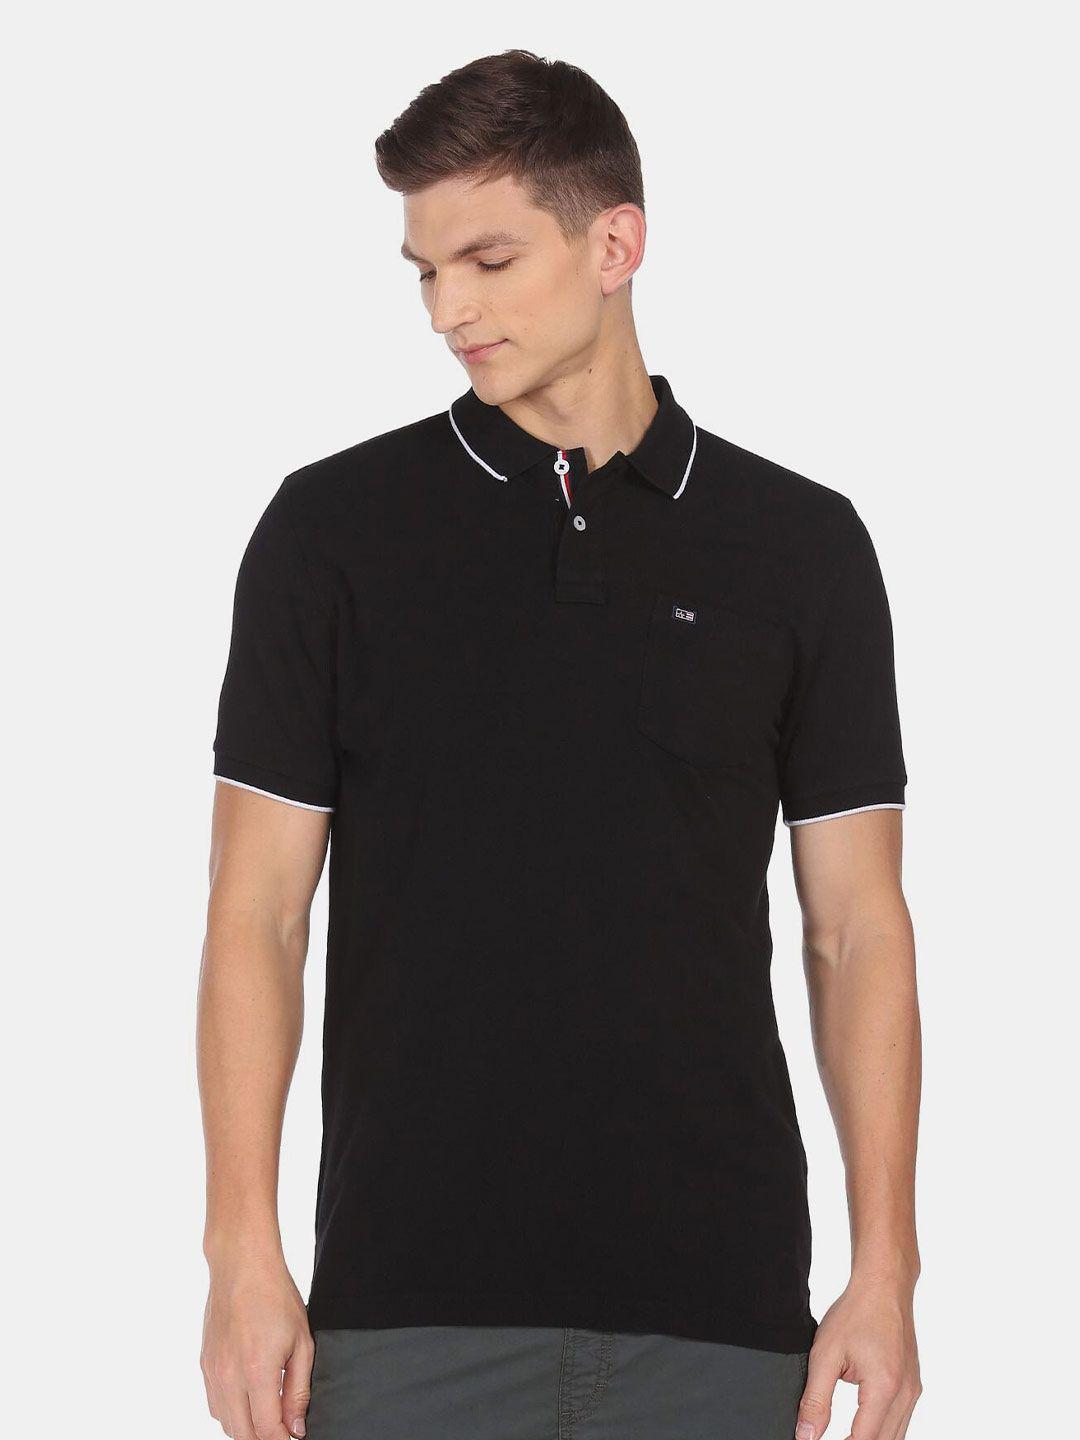 arrow-sport-men-black-polo-collar-t-shirt